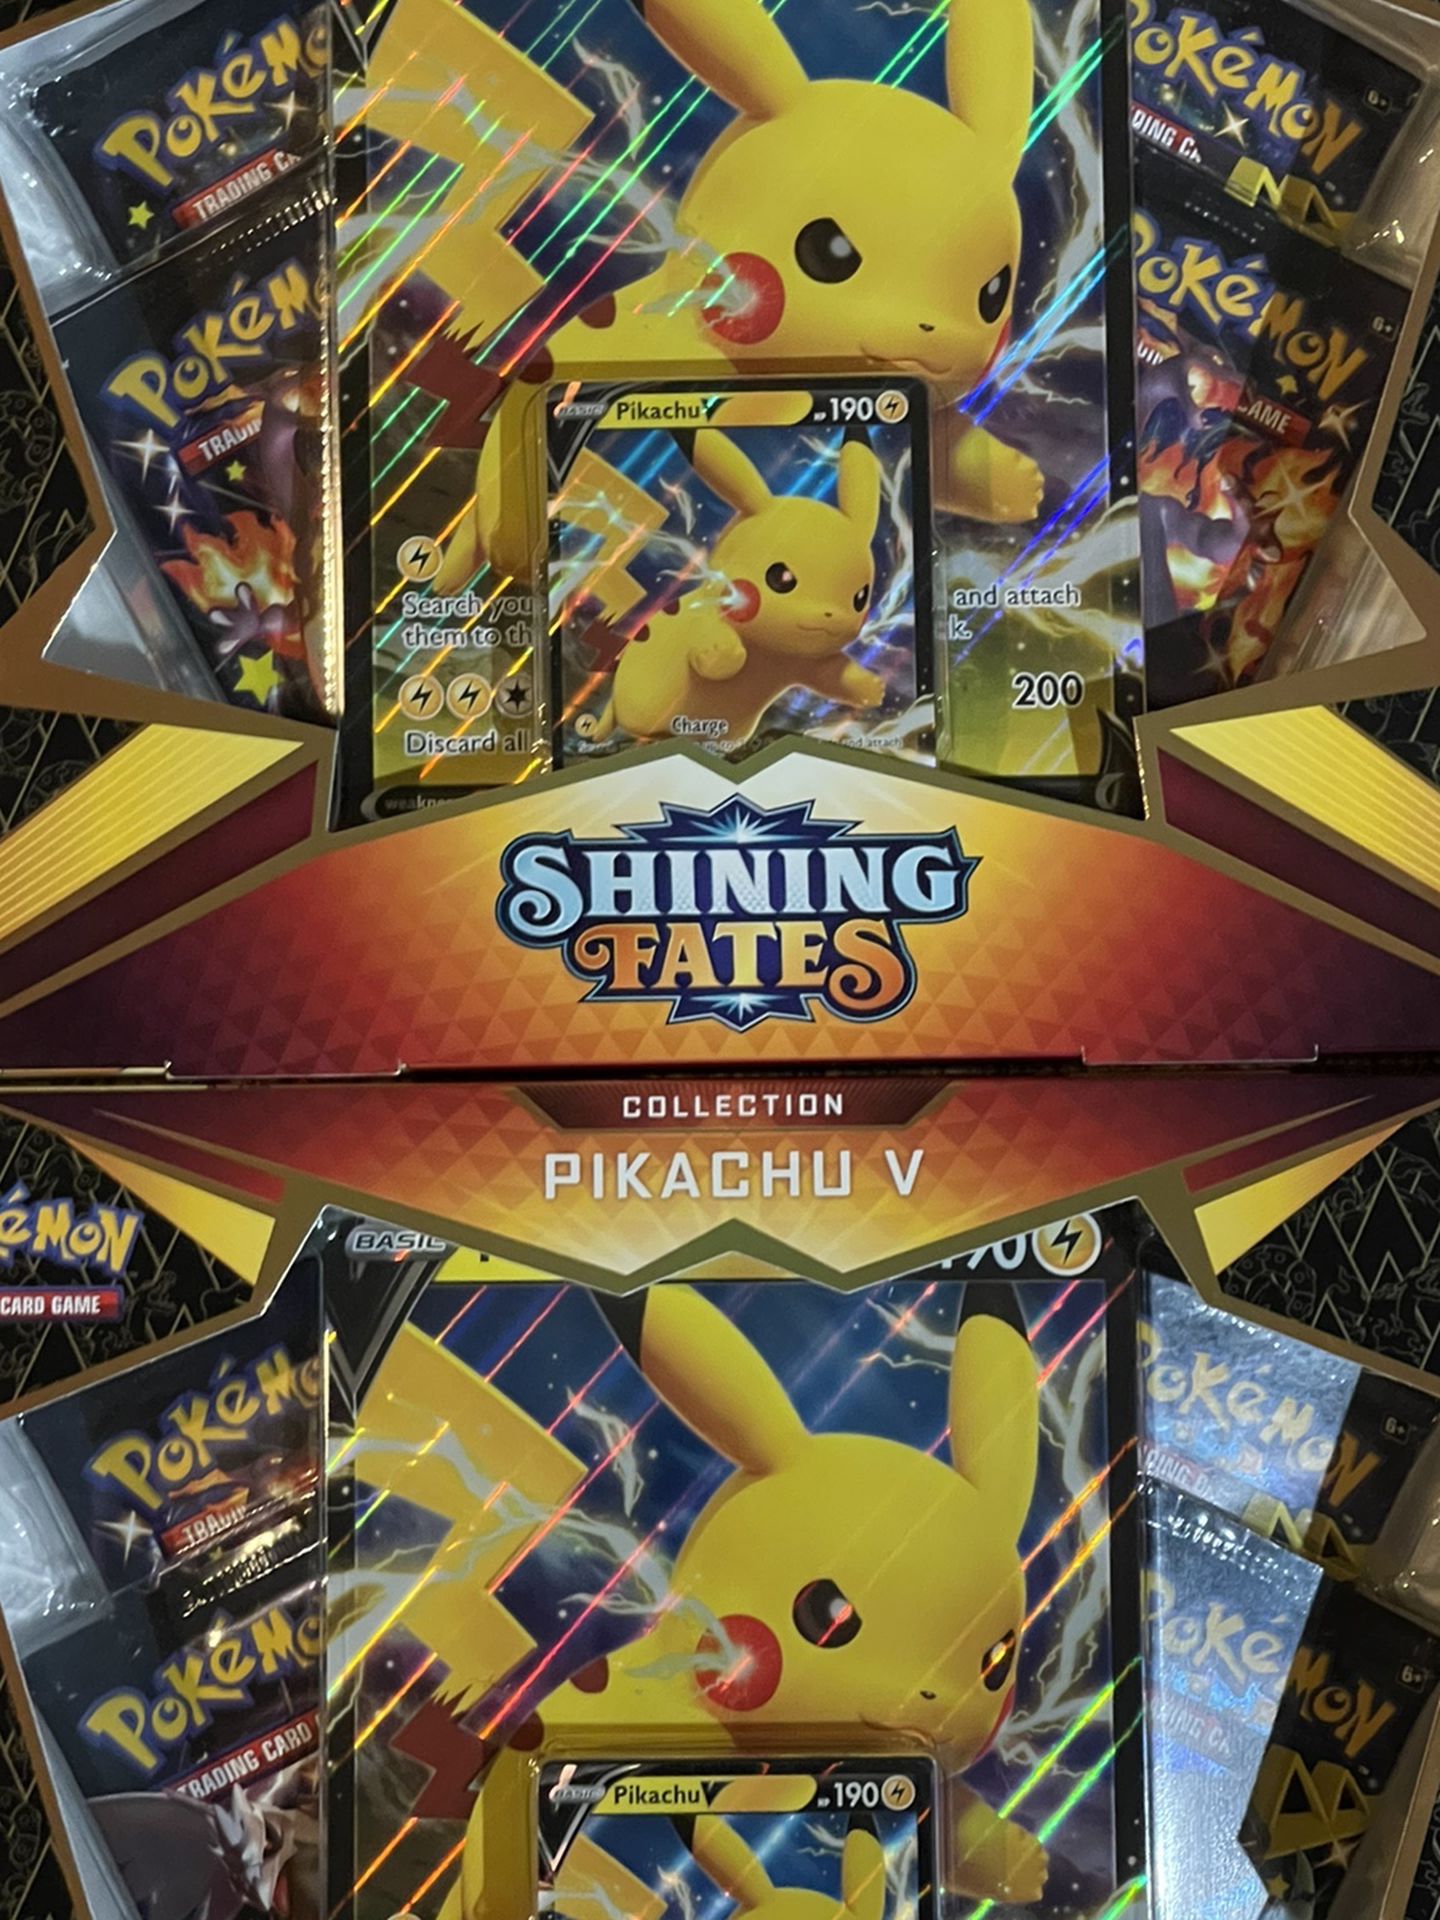 New Shining Fates Pikachu boxes